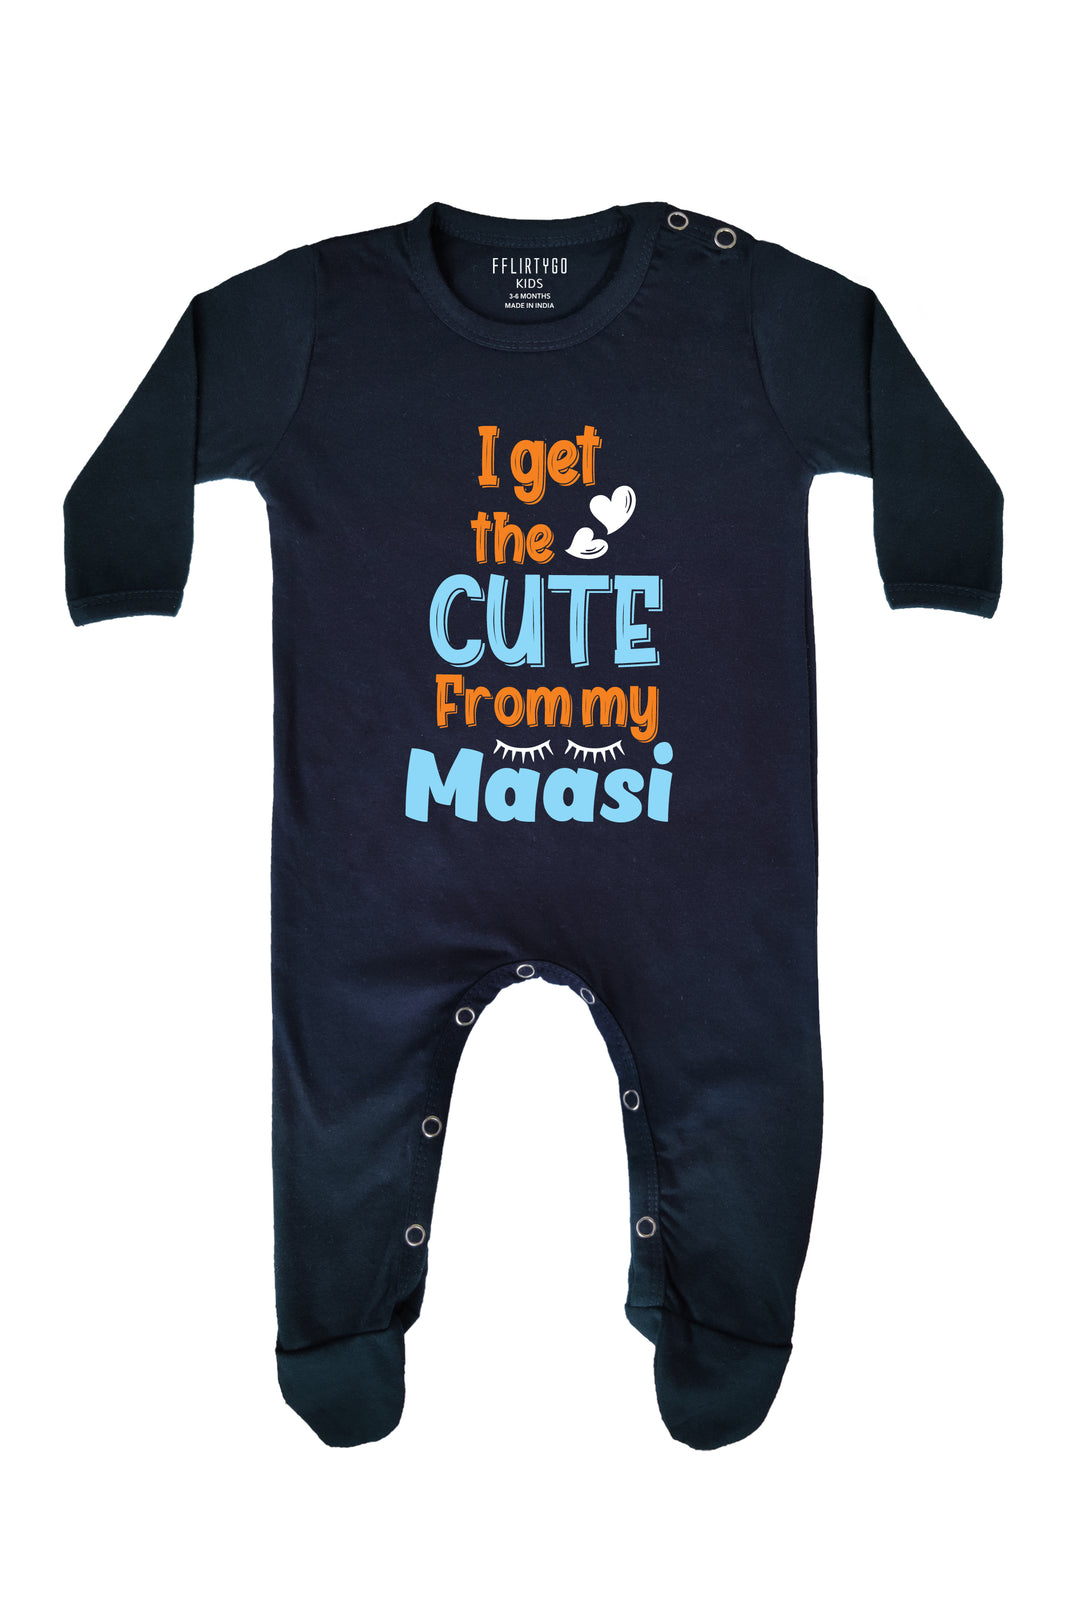 I Get The Cute From My Maasi Baby Romper | Onesies